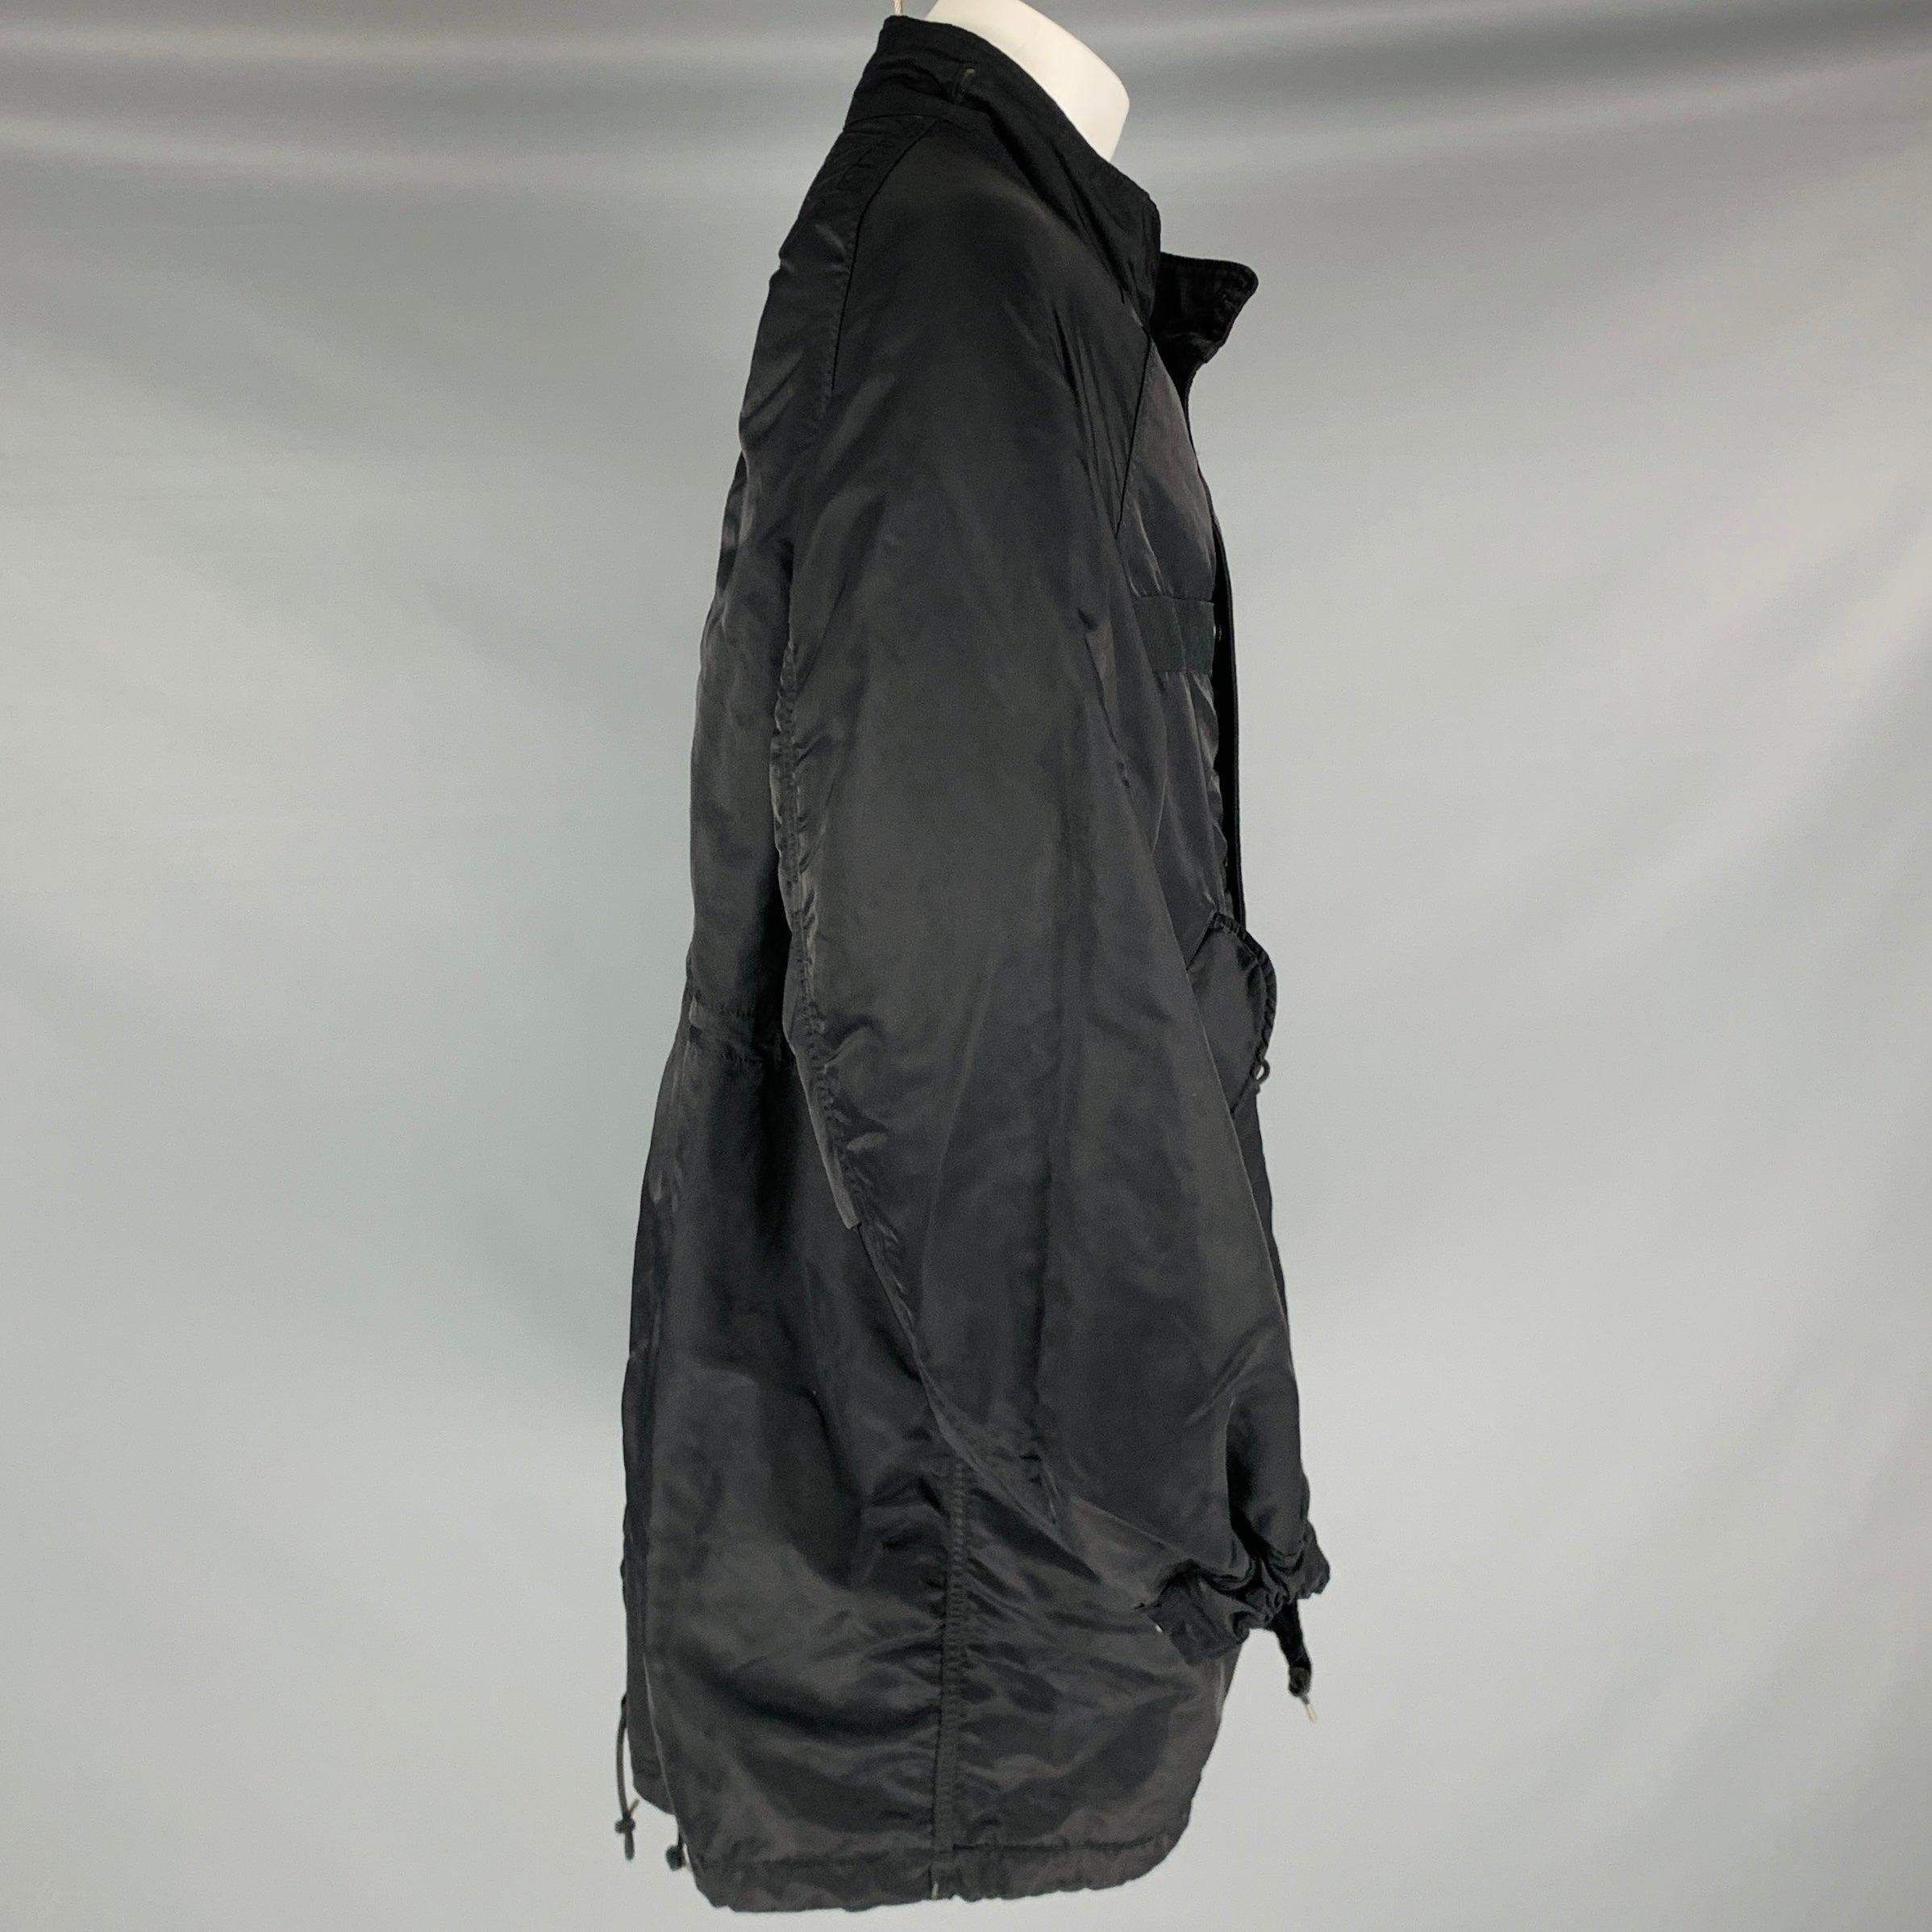 VISVIM -Six Five Fishtail Parka- Size S Black Nylon Parka Coat In Excellent Condition For Sale In San Francisco, CA